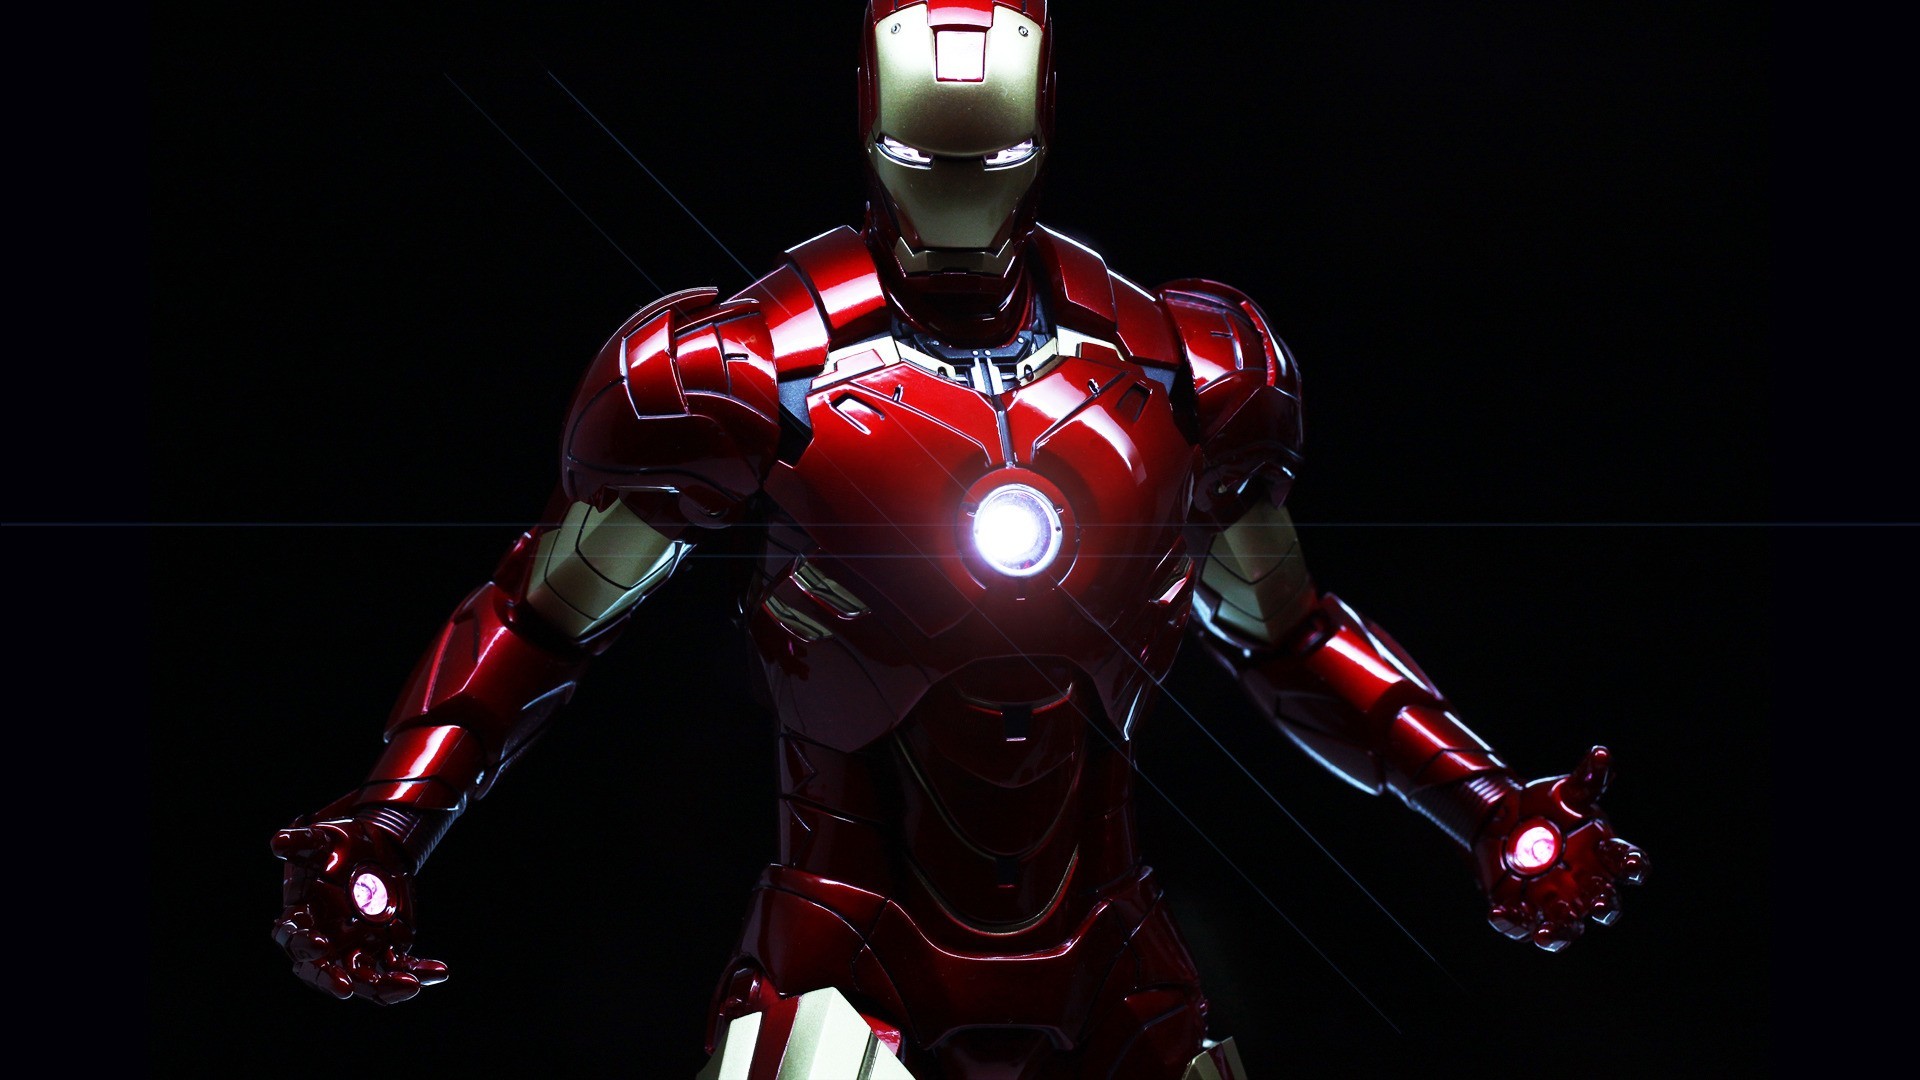 1920x1080 Ironman - Part of my exosuit collection. Ironman (Tony Stark) is a superhero